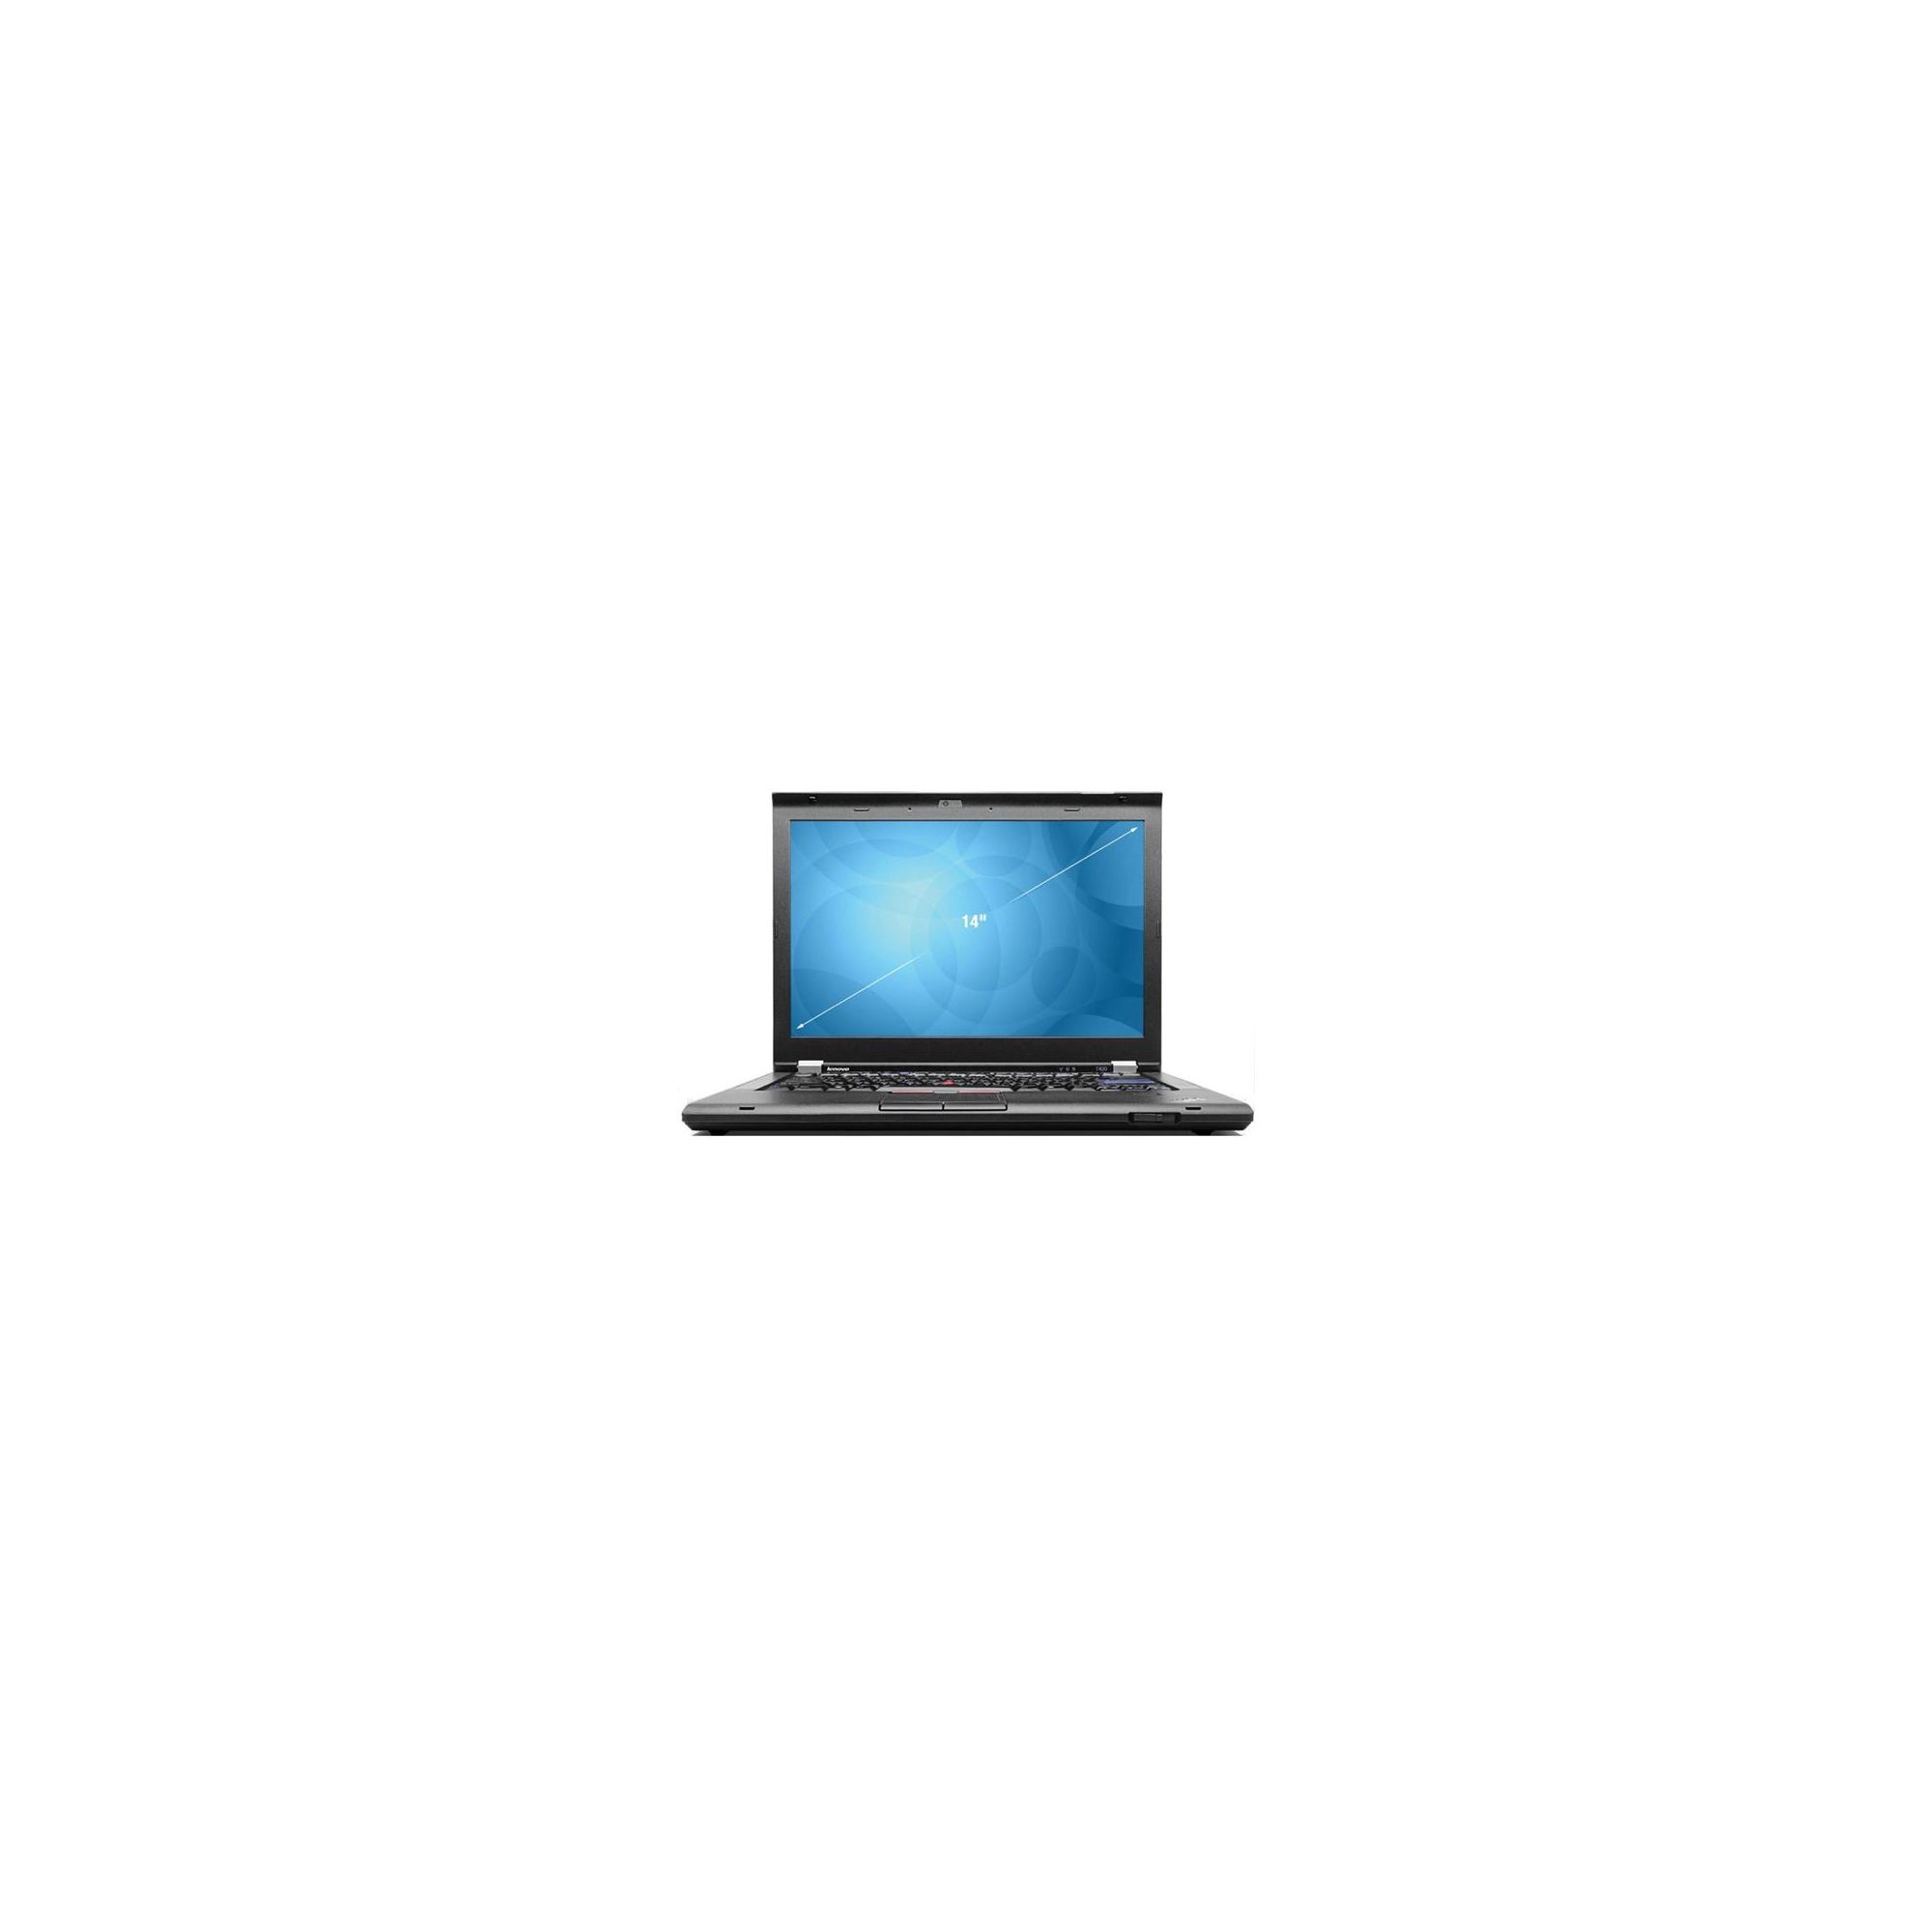 Lenovo ThinkPad T420 (14.0 inch) Notebook Core i7 (2640M) 2.8GHz 4GB 500GB DVD±RW WLAN WWAN BT Webcam Windows 7 Pro 64-bit (nVidia NVS 4200M)